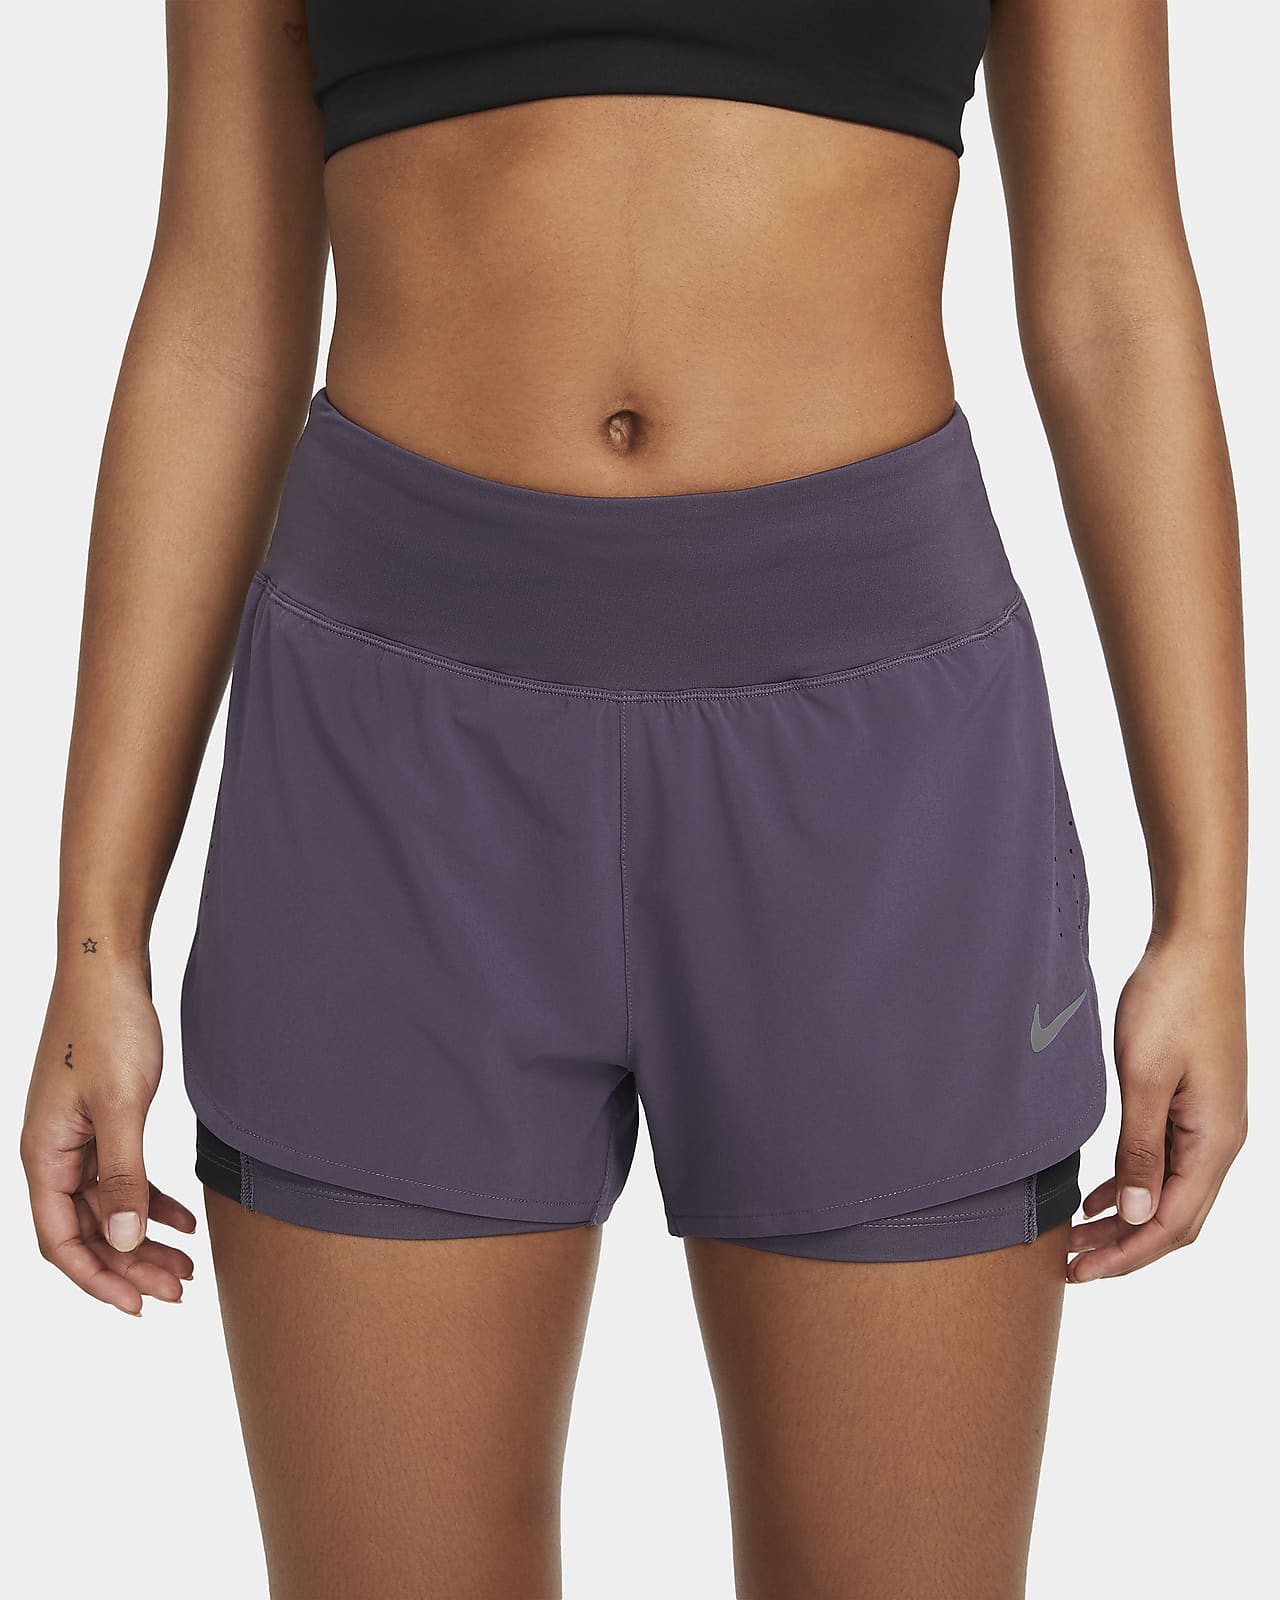 nike women's 2 in 1 running shorts